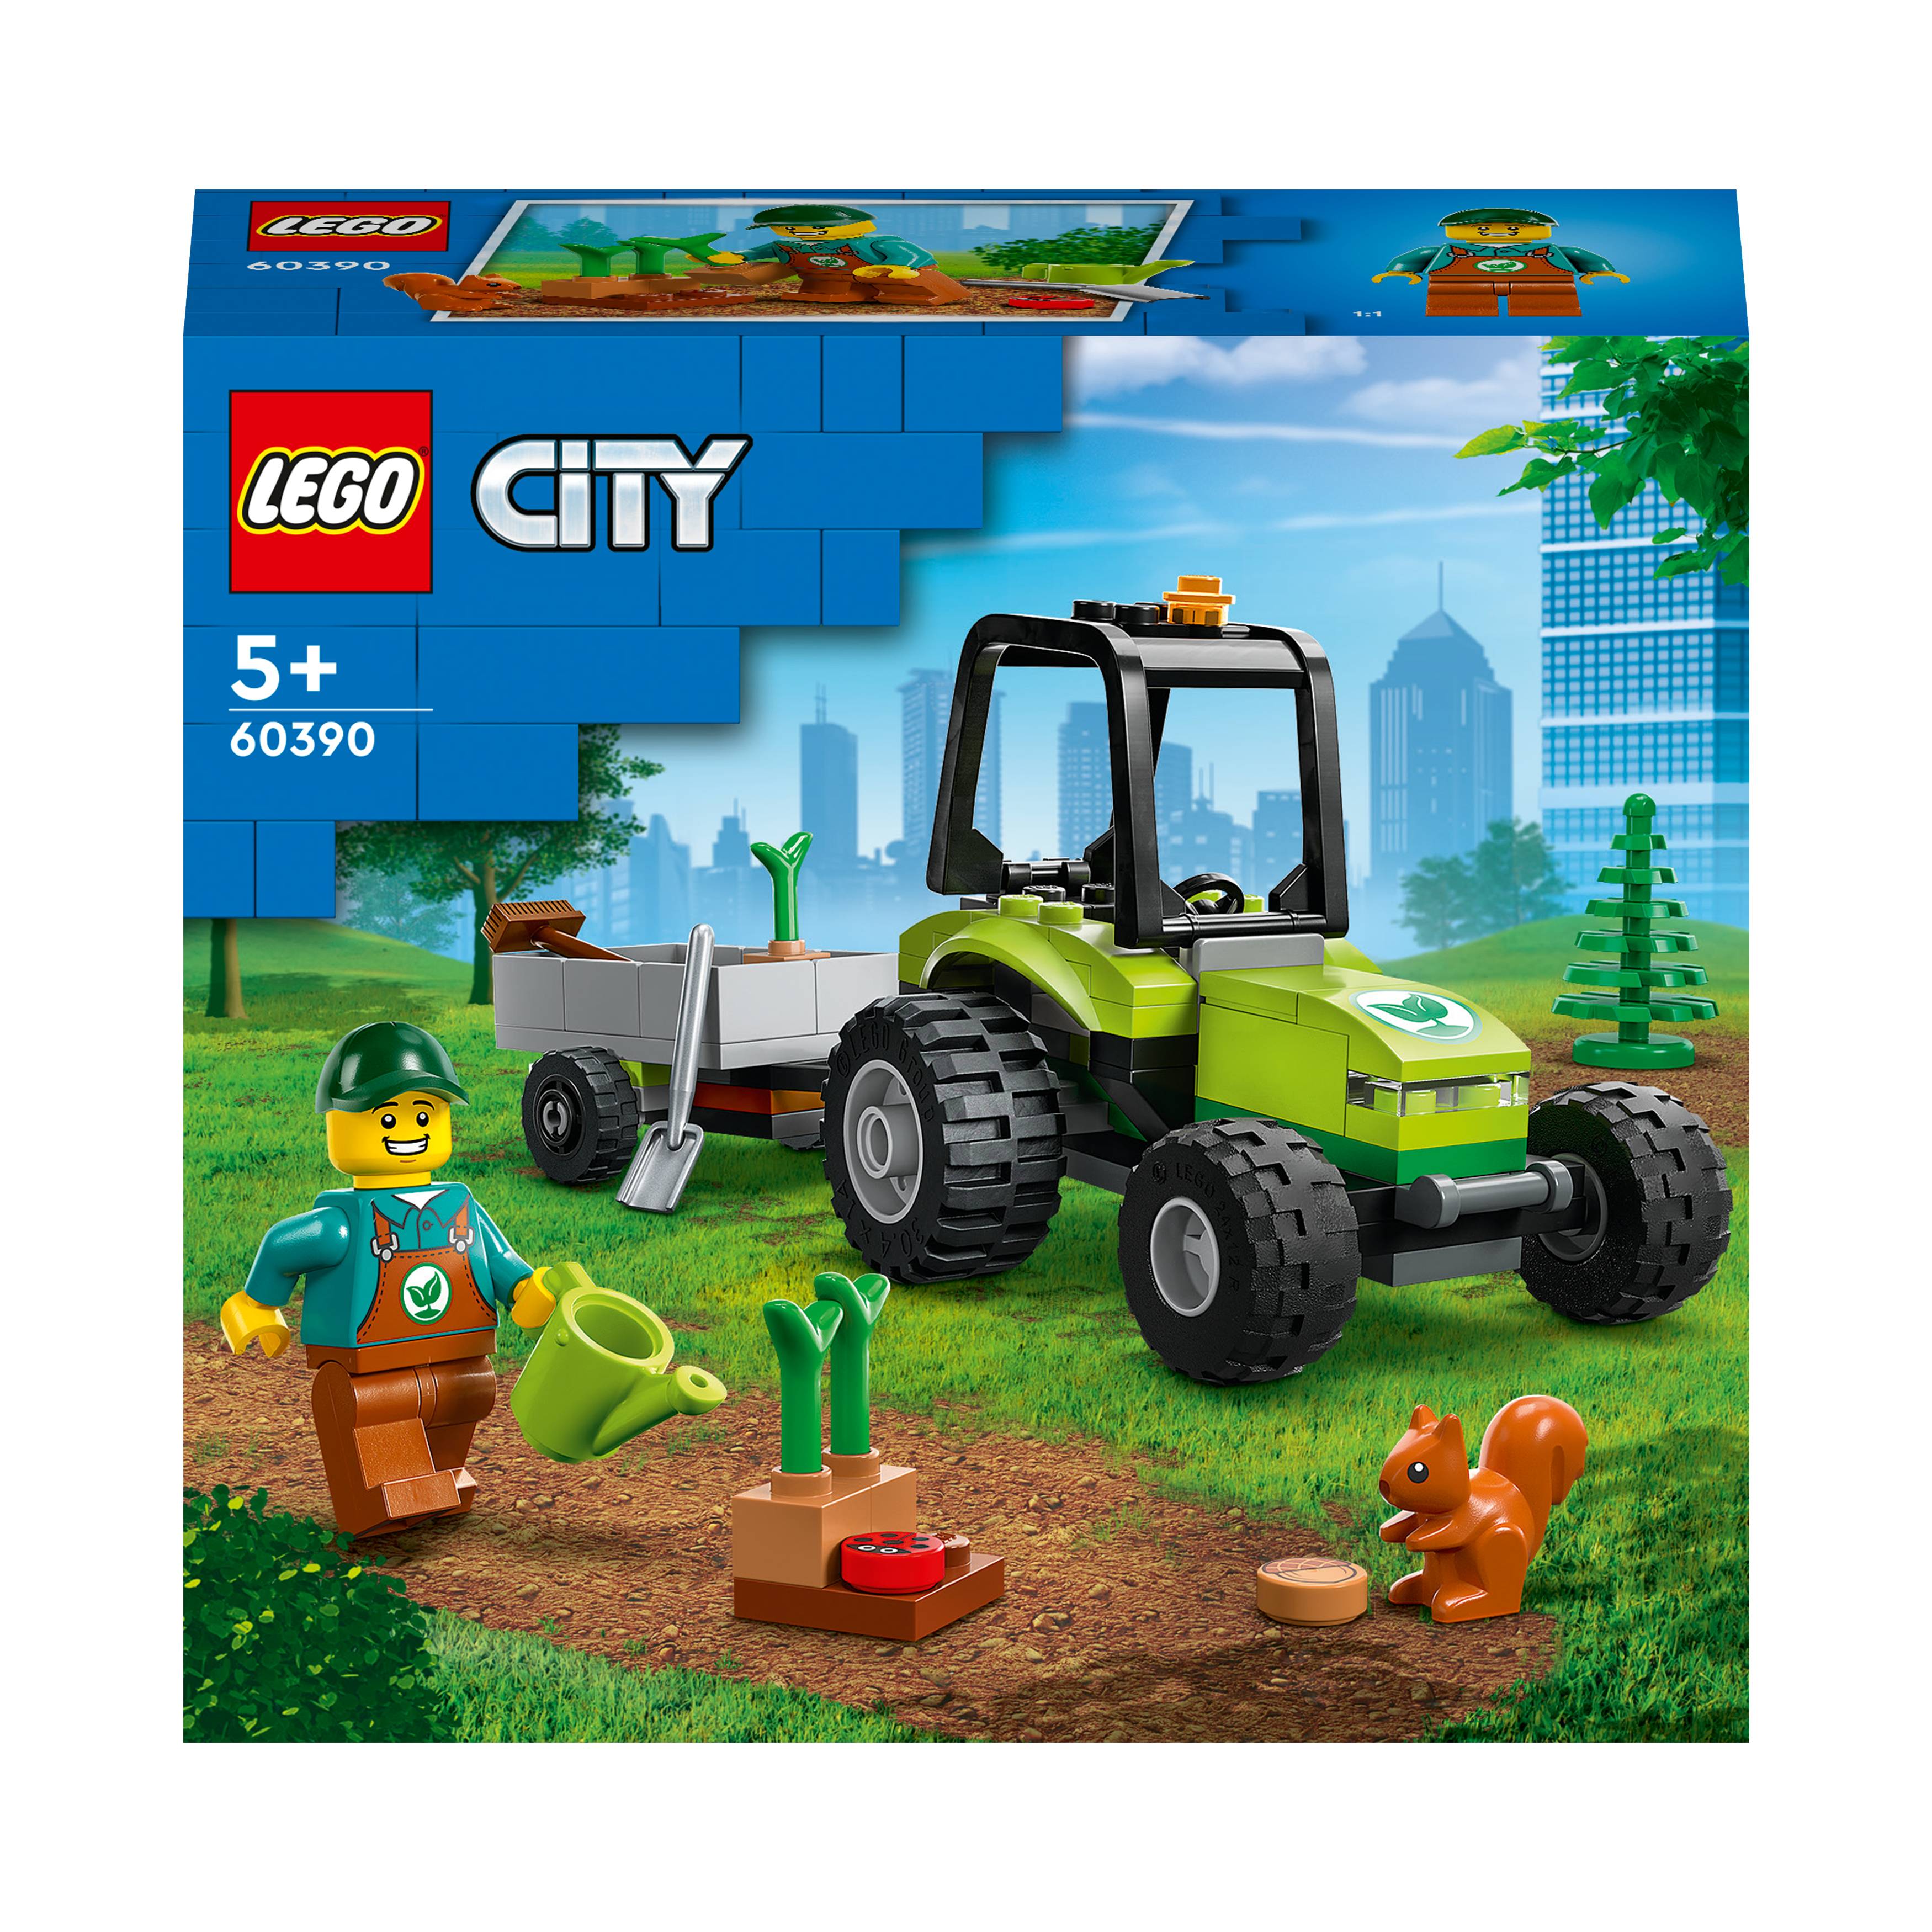 LEGO City Small Tractor 60390